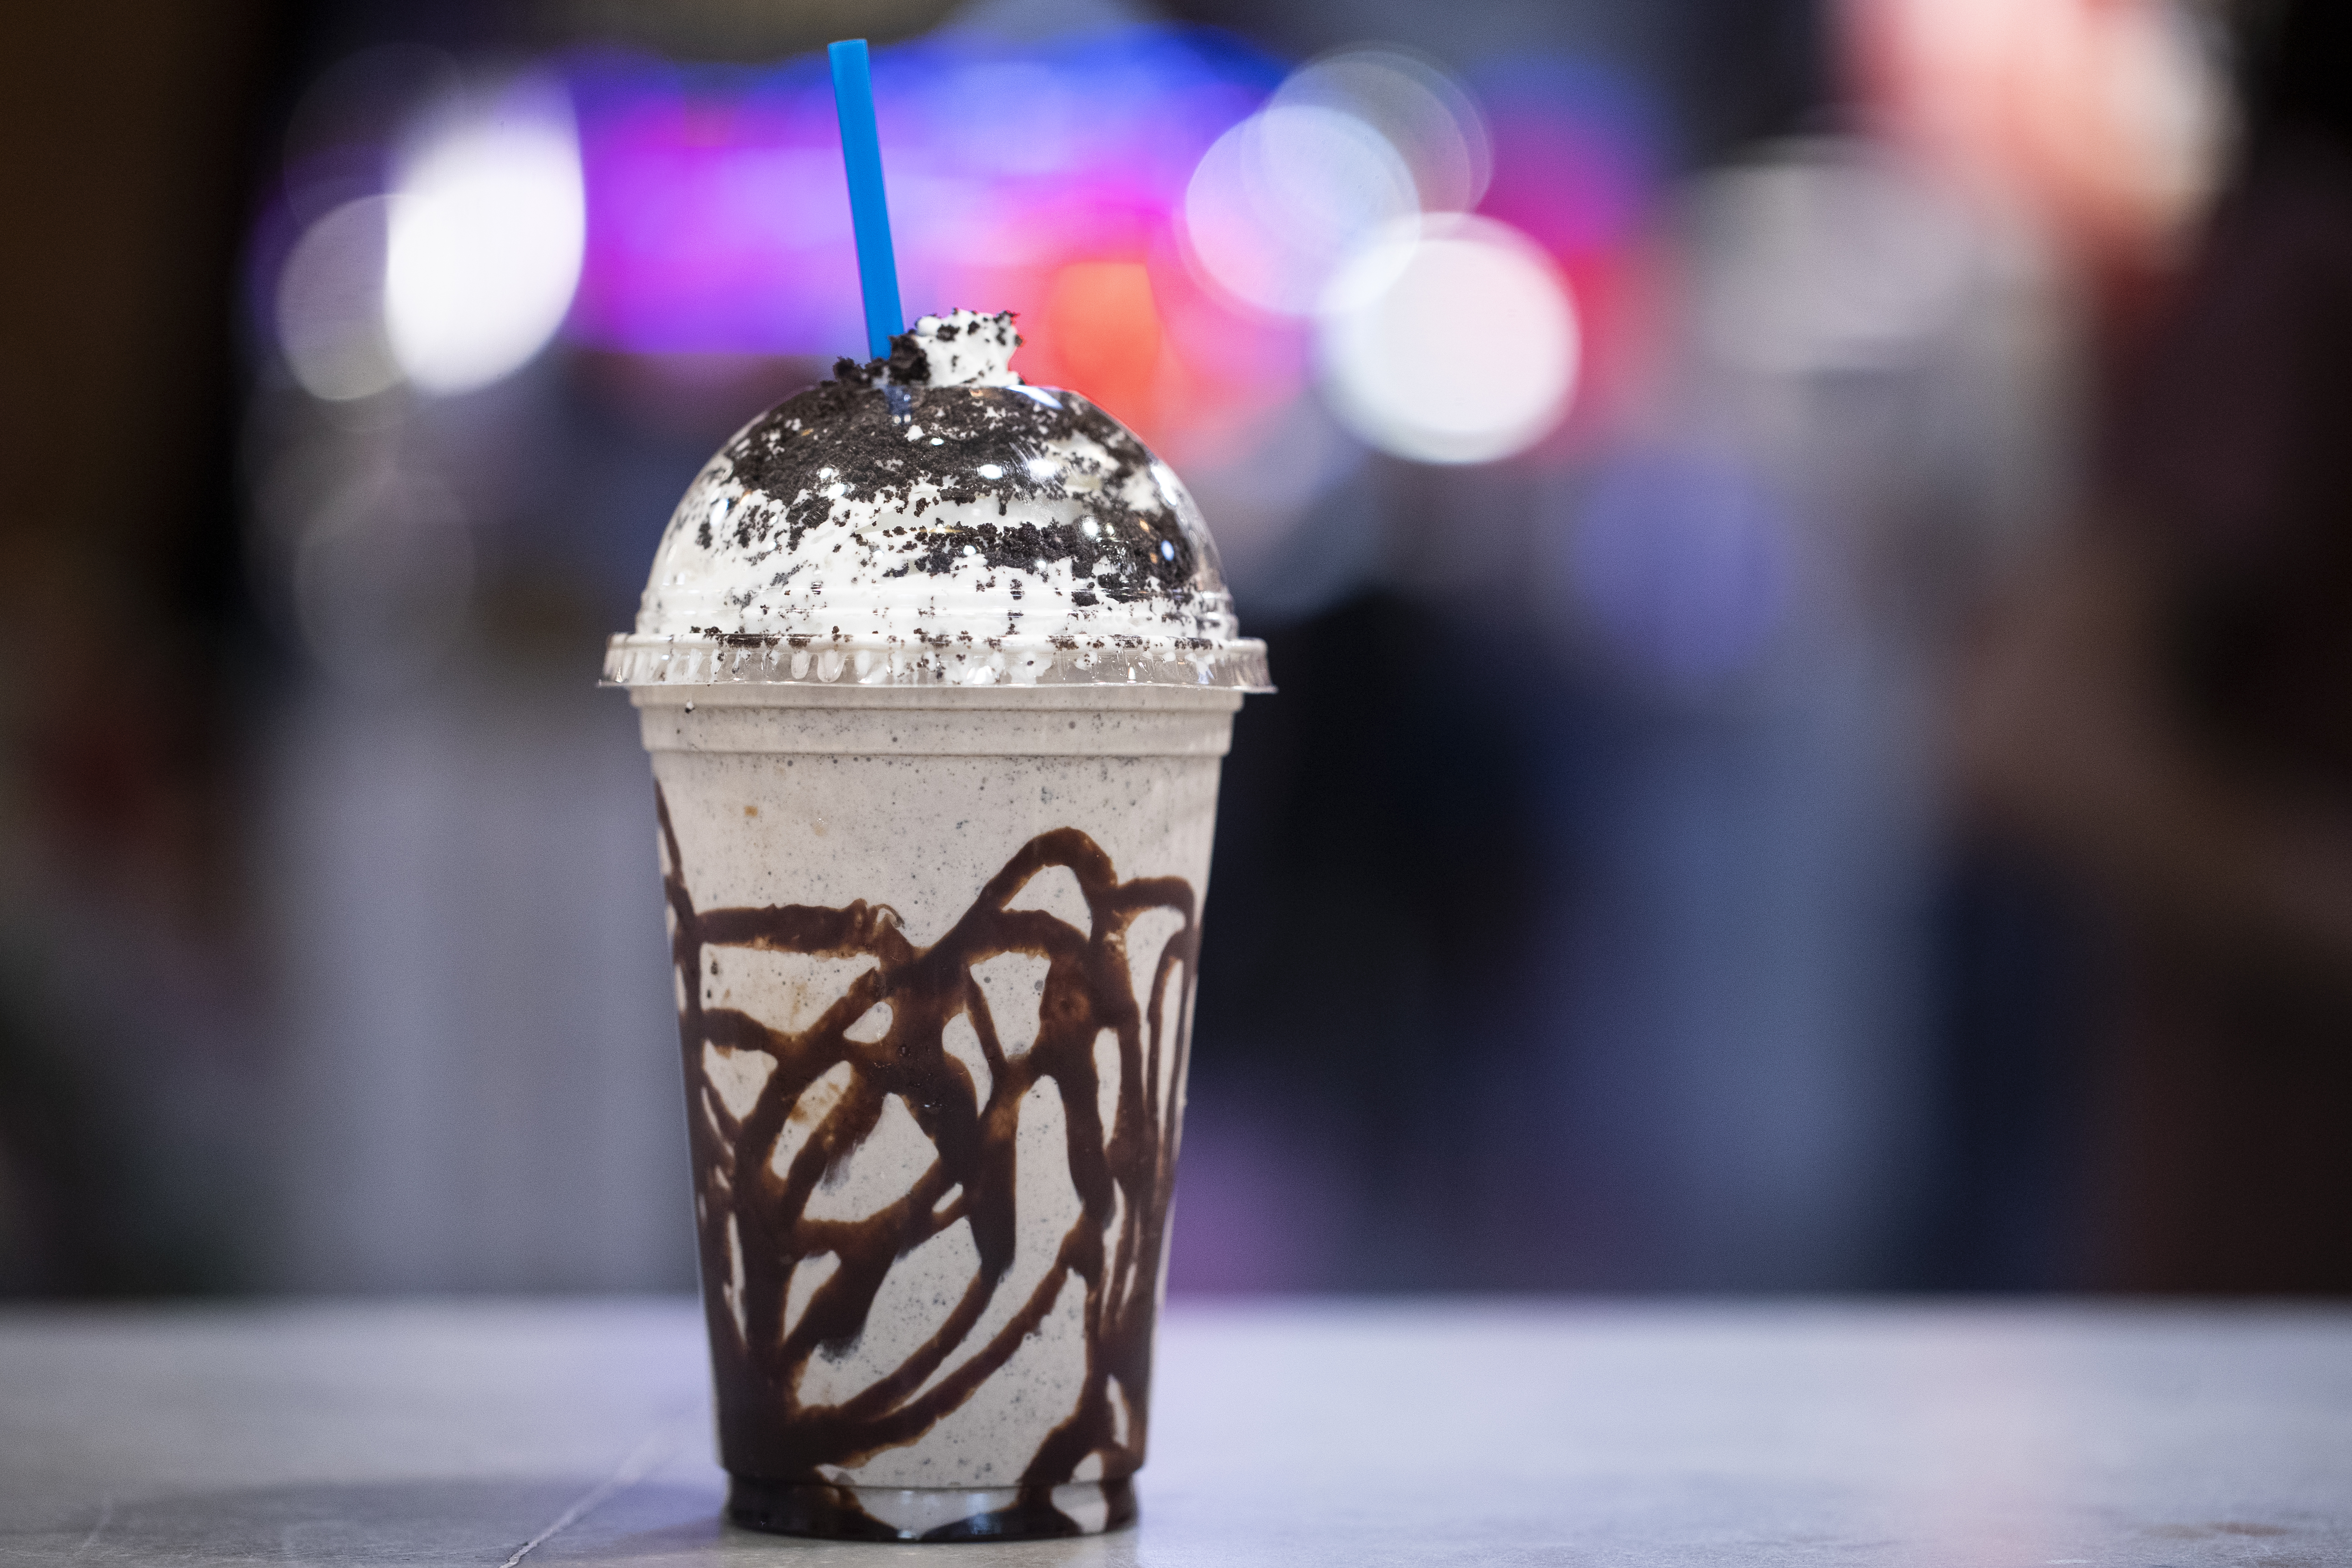 milkshake takeaway cup - Google Search